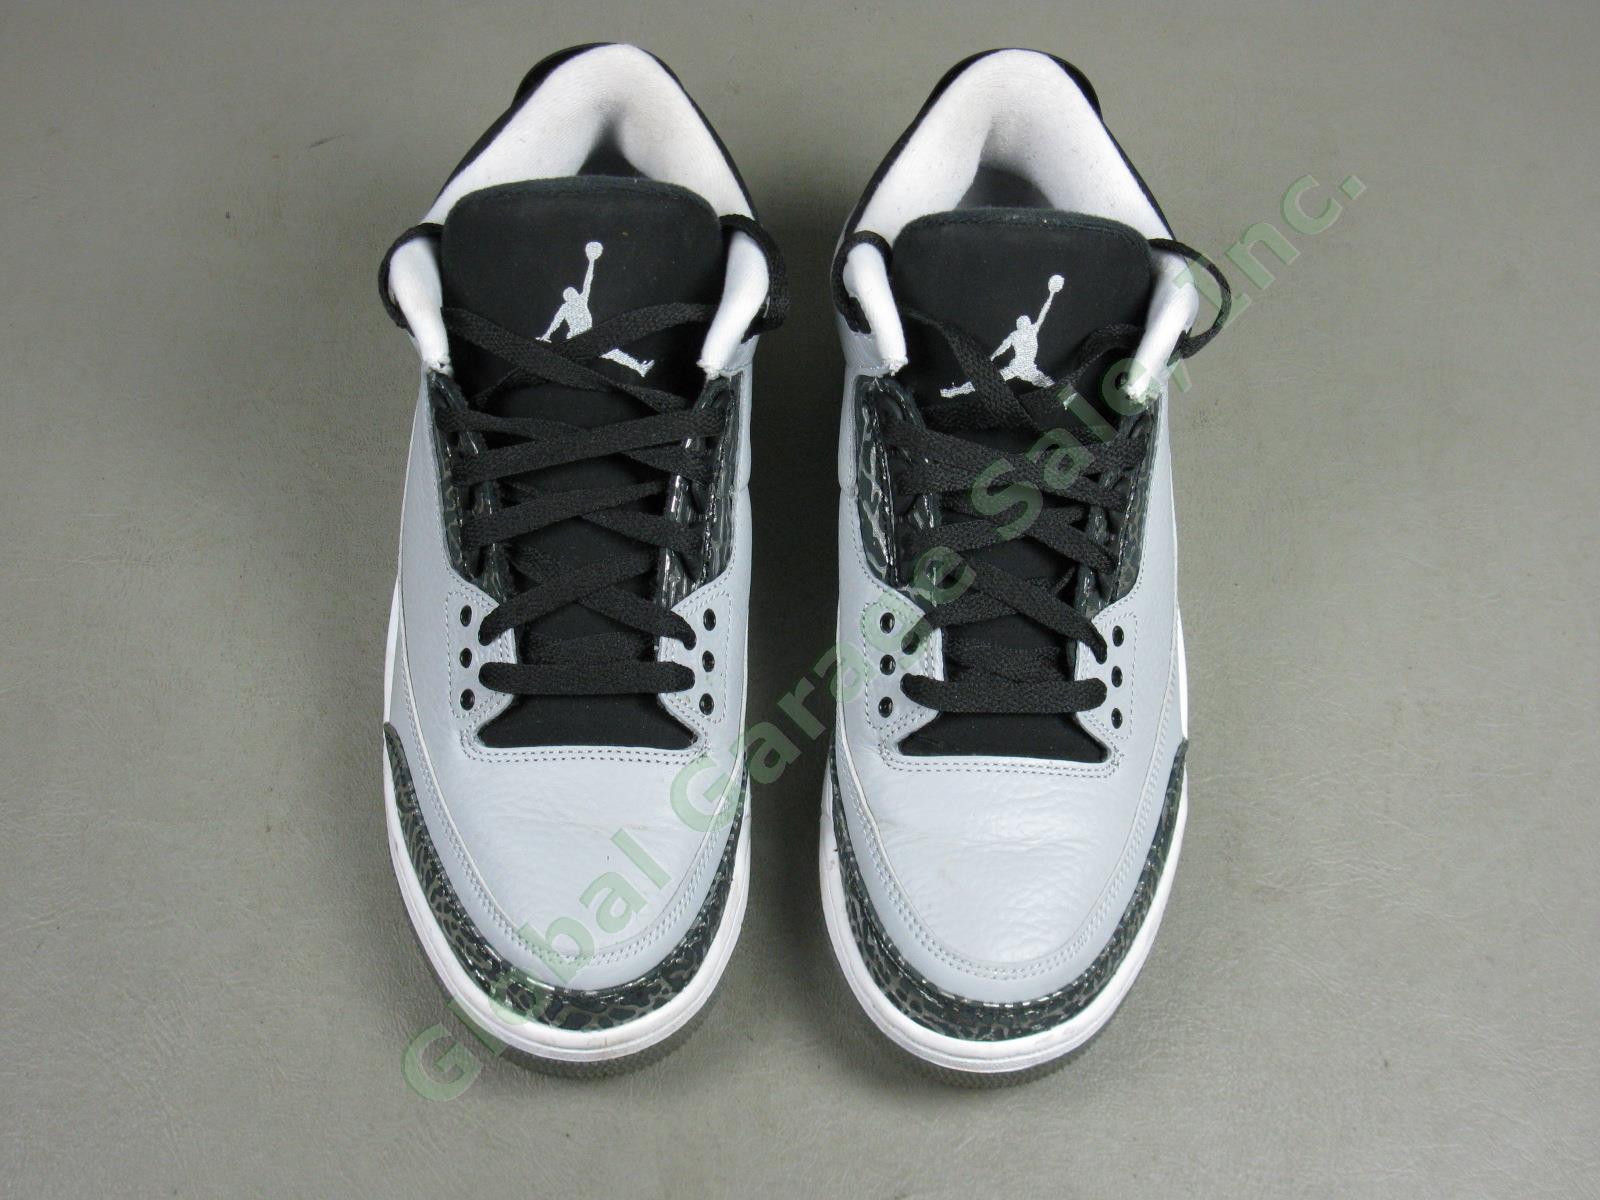 Nike Air Jordan 3 Retro Wolf Grey Basketball Shoes Size US 9 EUR 42.5 136064-004 5